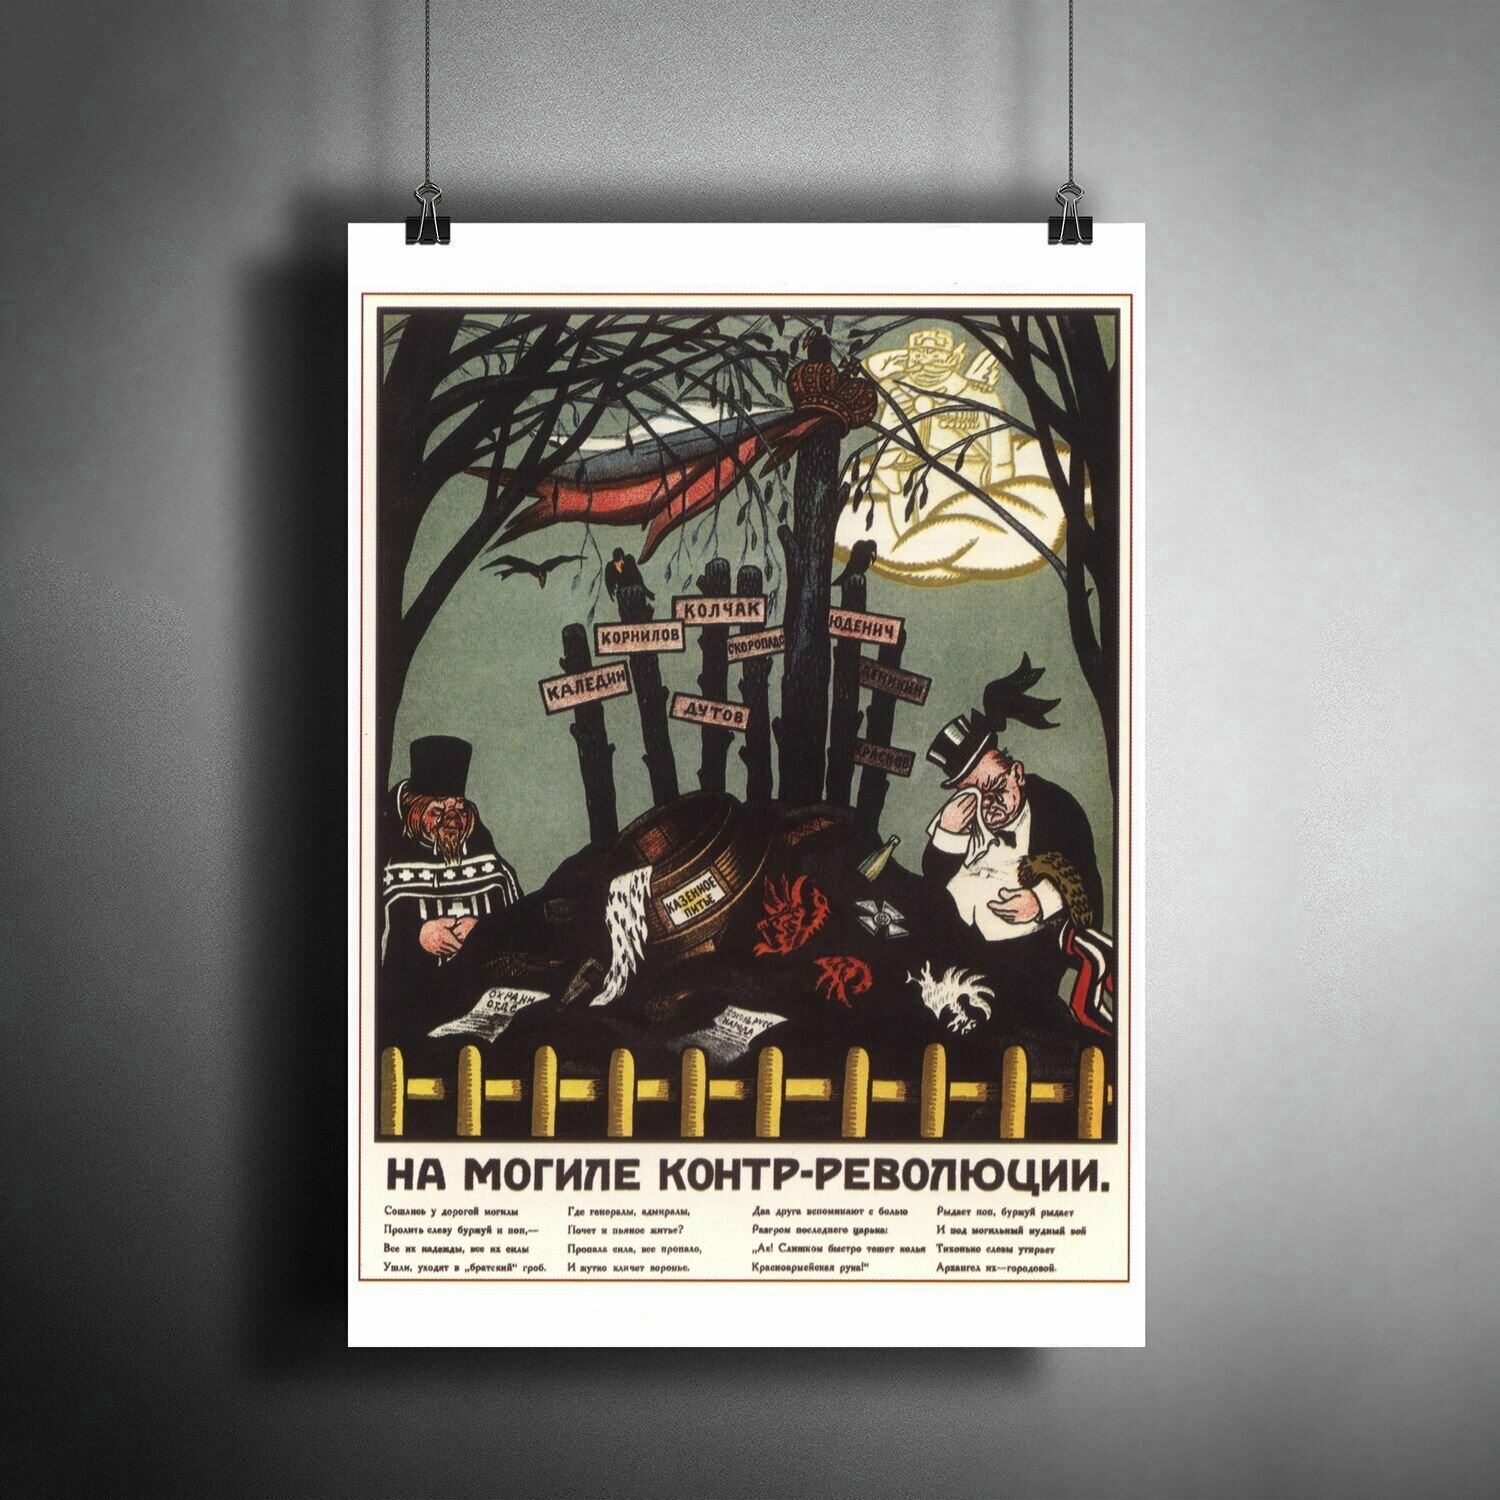 Постер плакат для интерьера "Советский плакат: На могиле контр-революции" / Декор дома, офиса, комнаты, квартиры, детской A3 (297 x 420 мм)